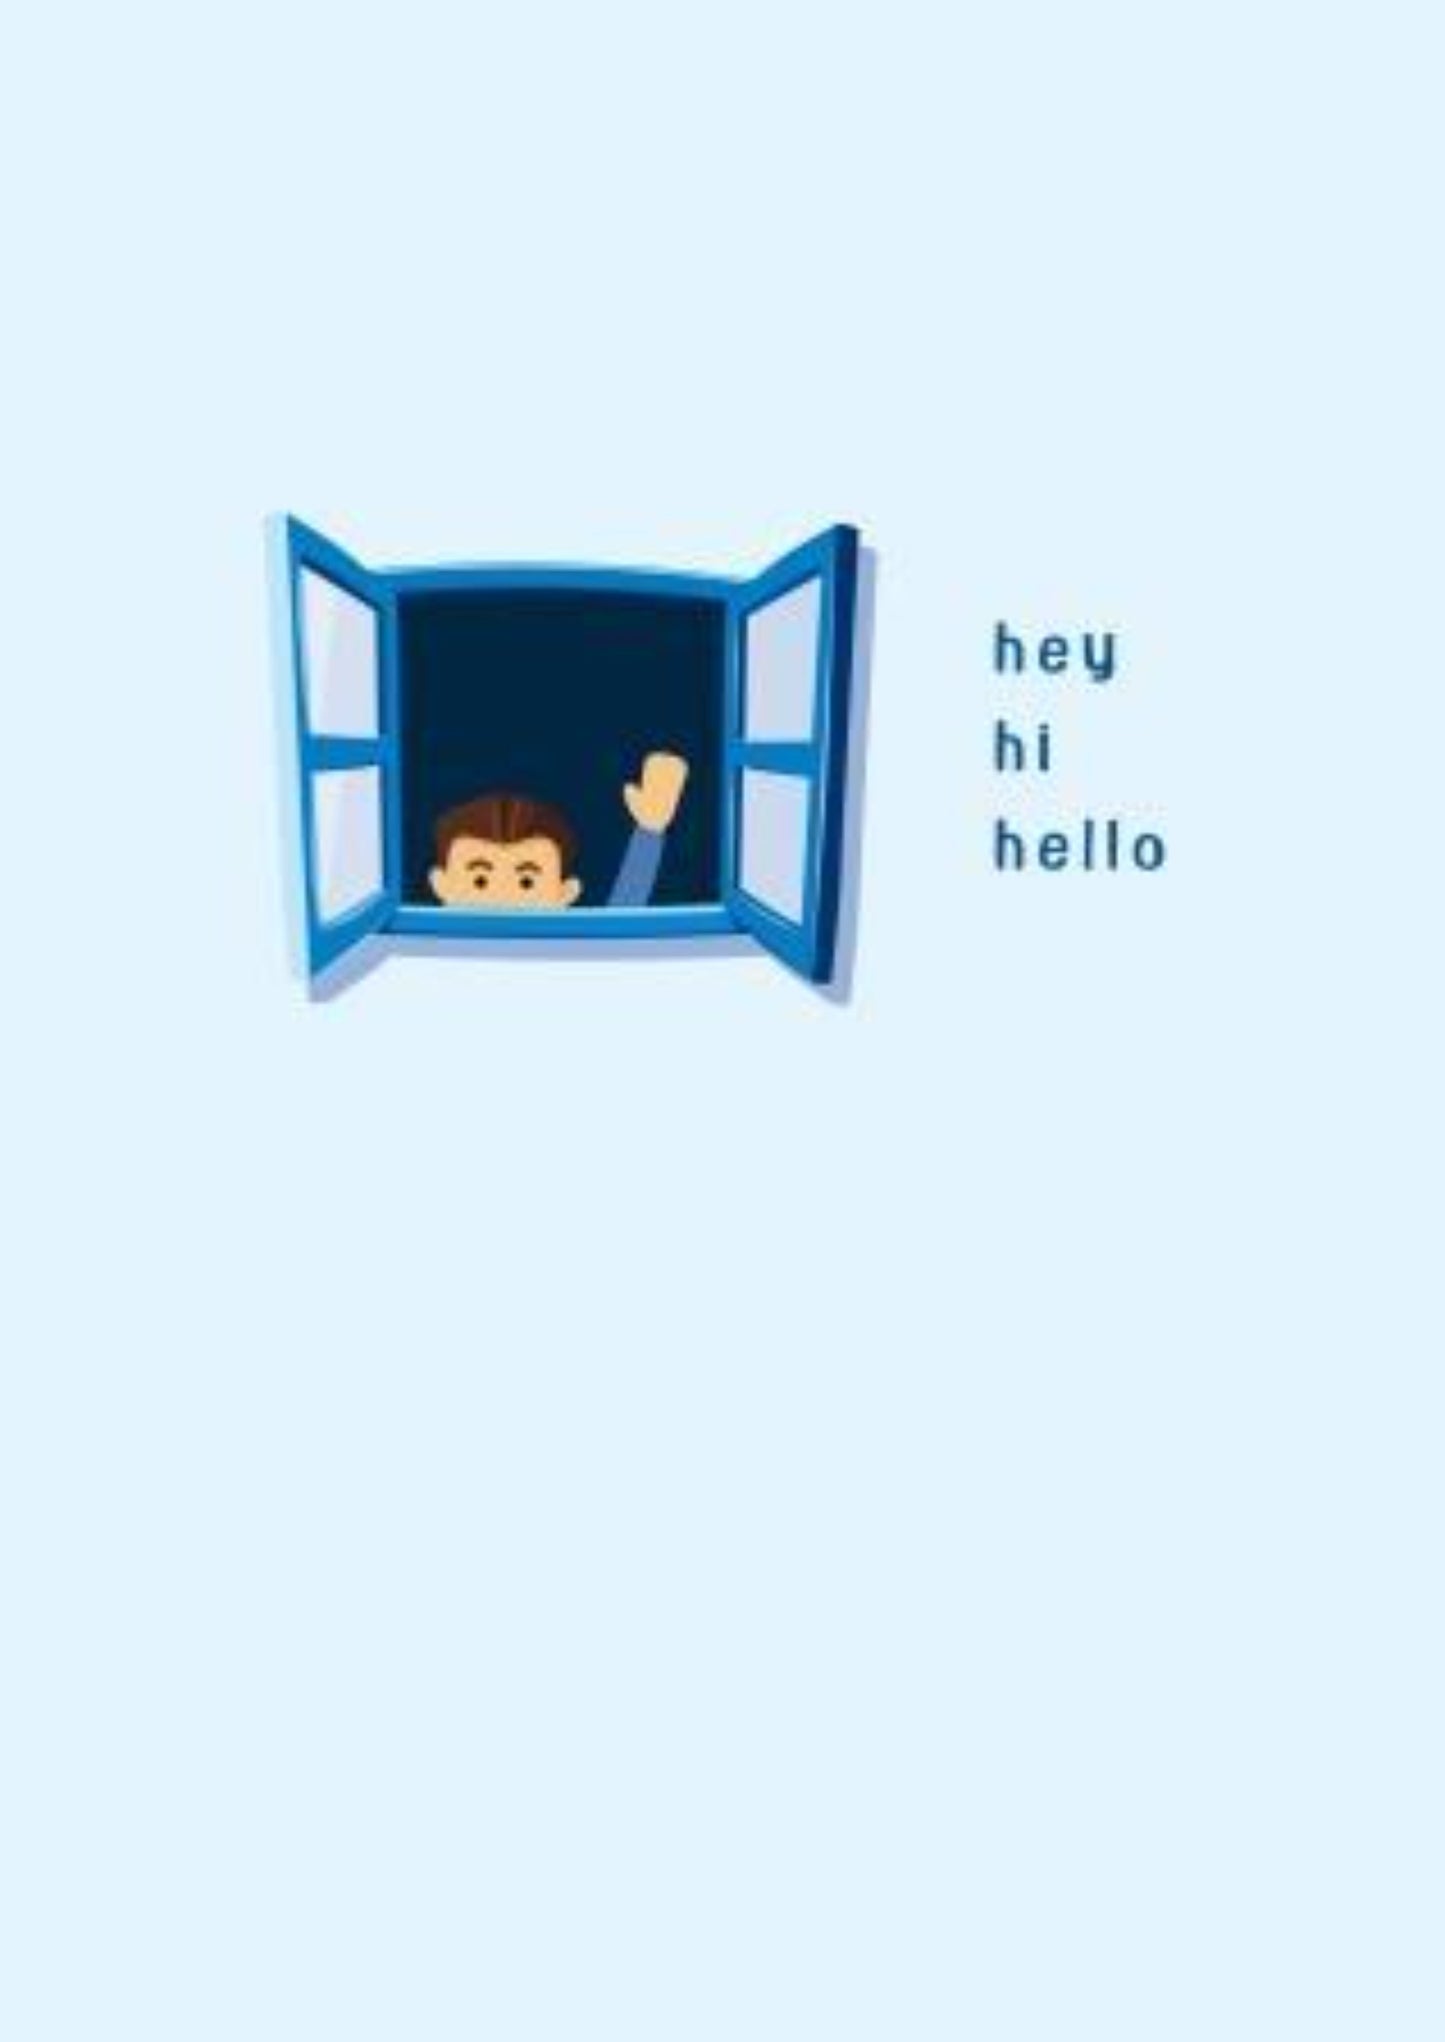 Hey Hi Hello - Thinking Of You Greeting Card.